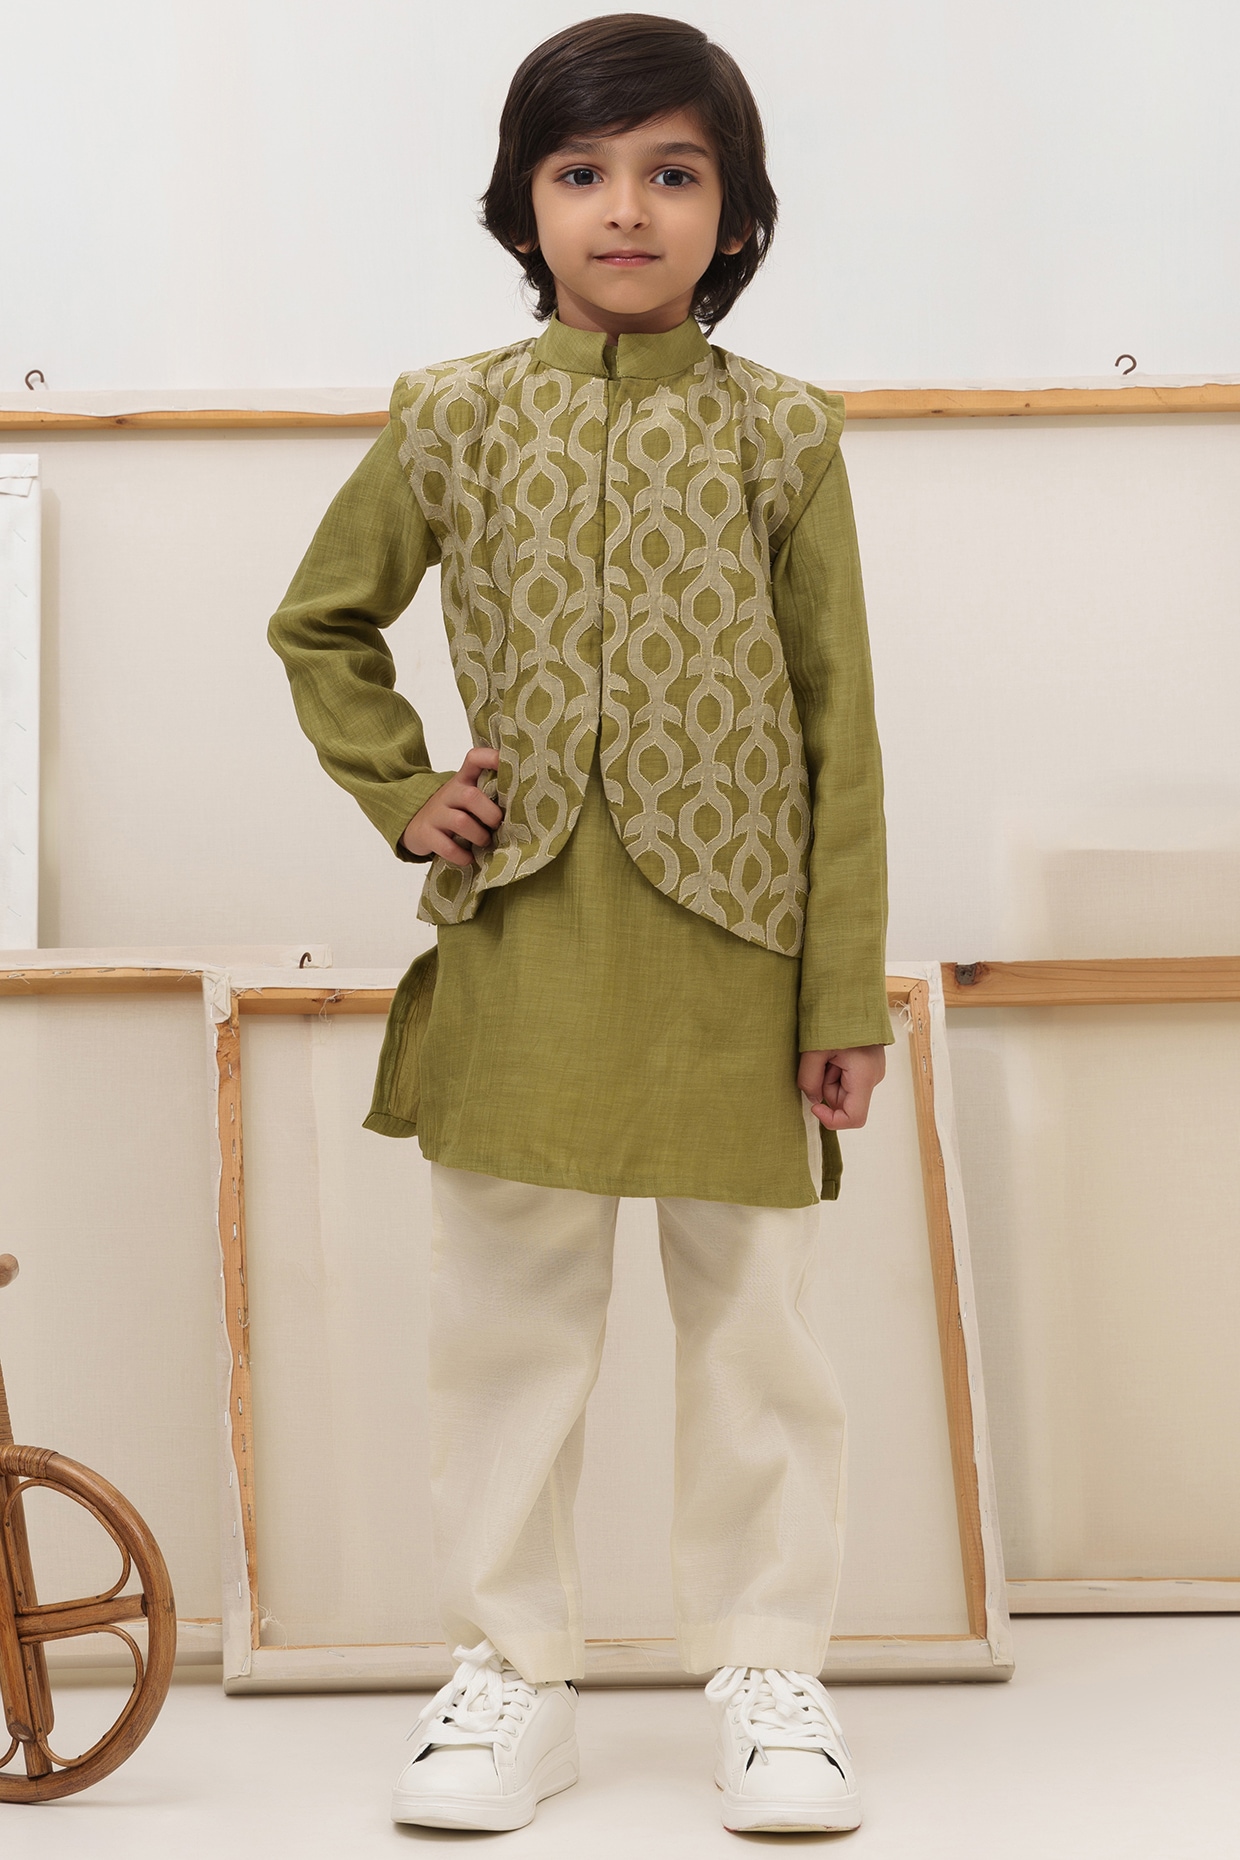 Buy Ajirna Fashion Men's Regular Fit, Bandhgala Off White Tweed Wool  Fabric, Ethnic Nehru Jacket/Modi Jacket, Waistcoat size, Available (36-46)  at Amazon.in